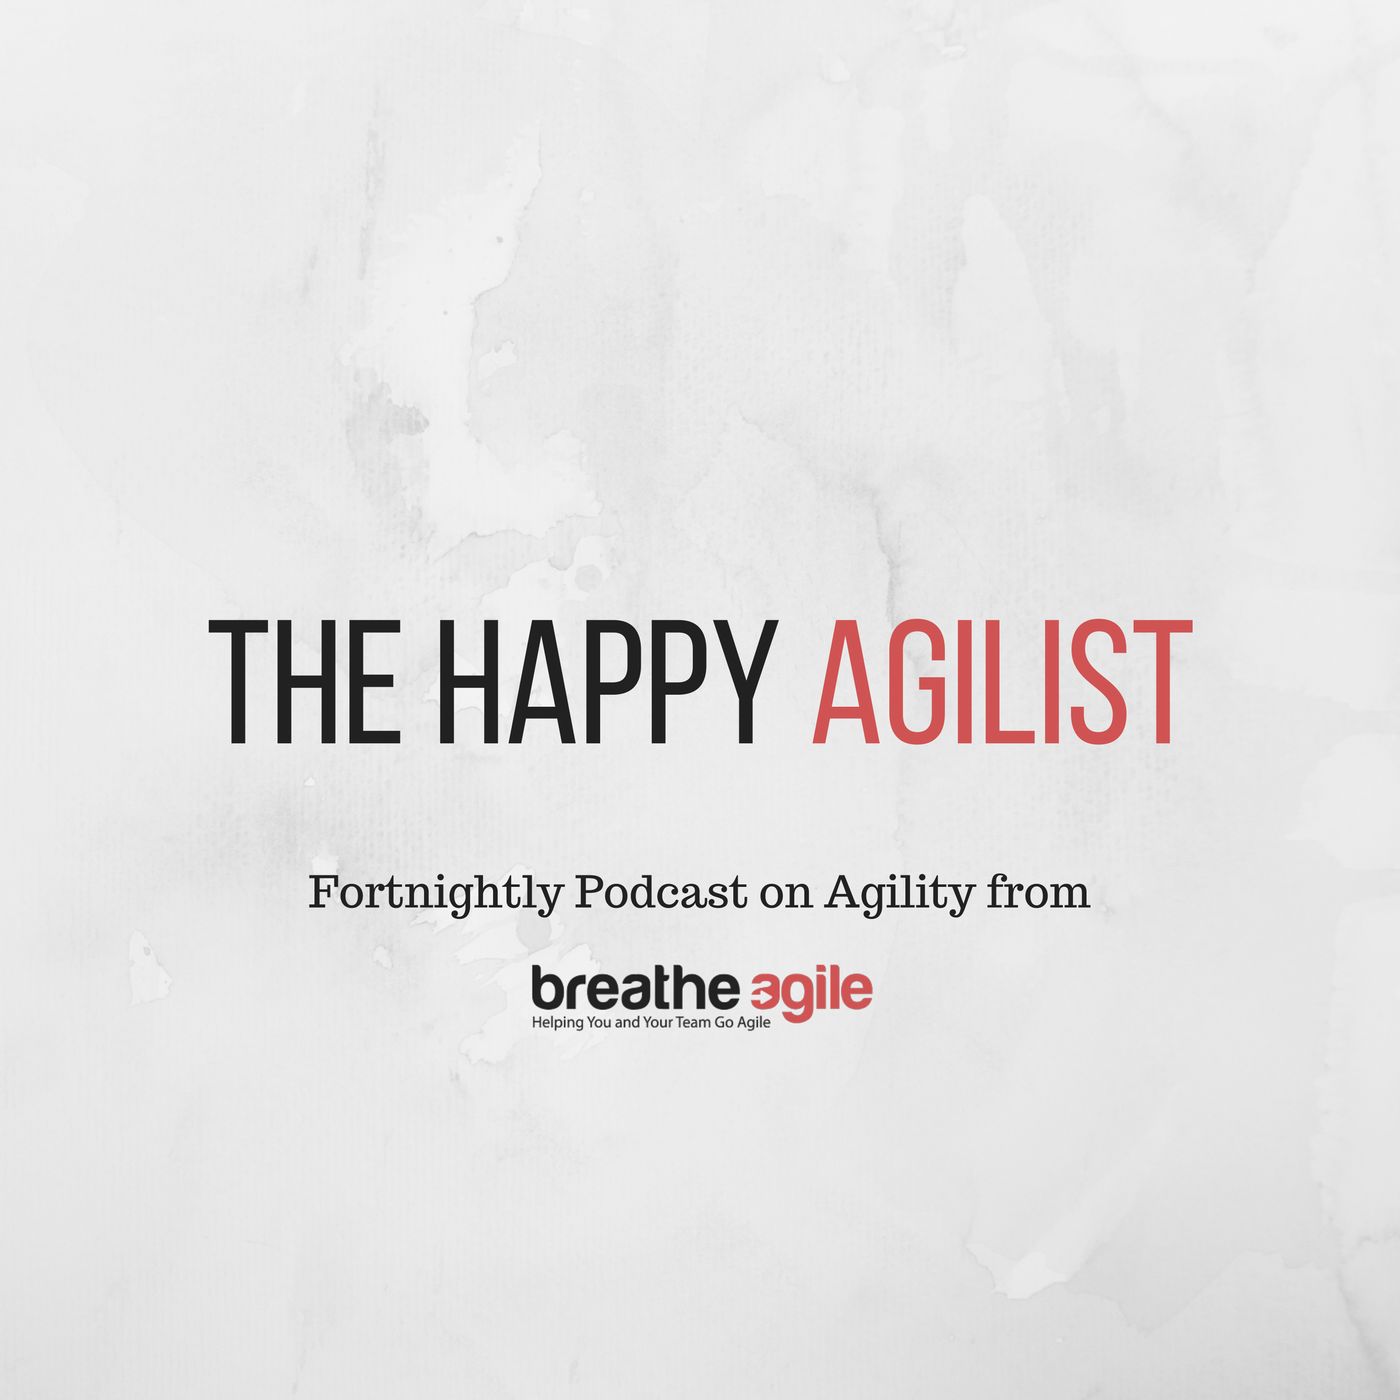 The Happy Agilist Podcast